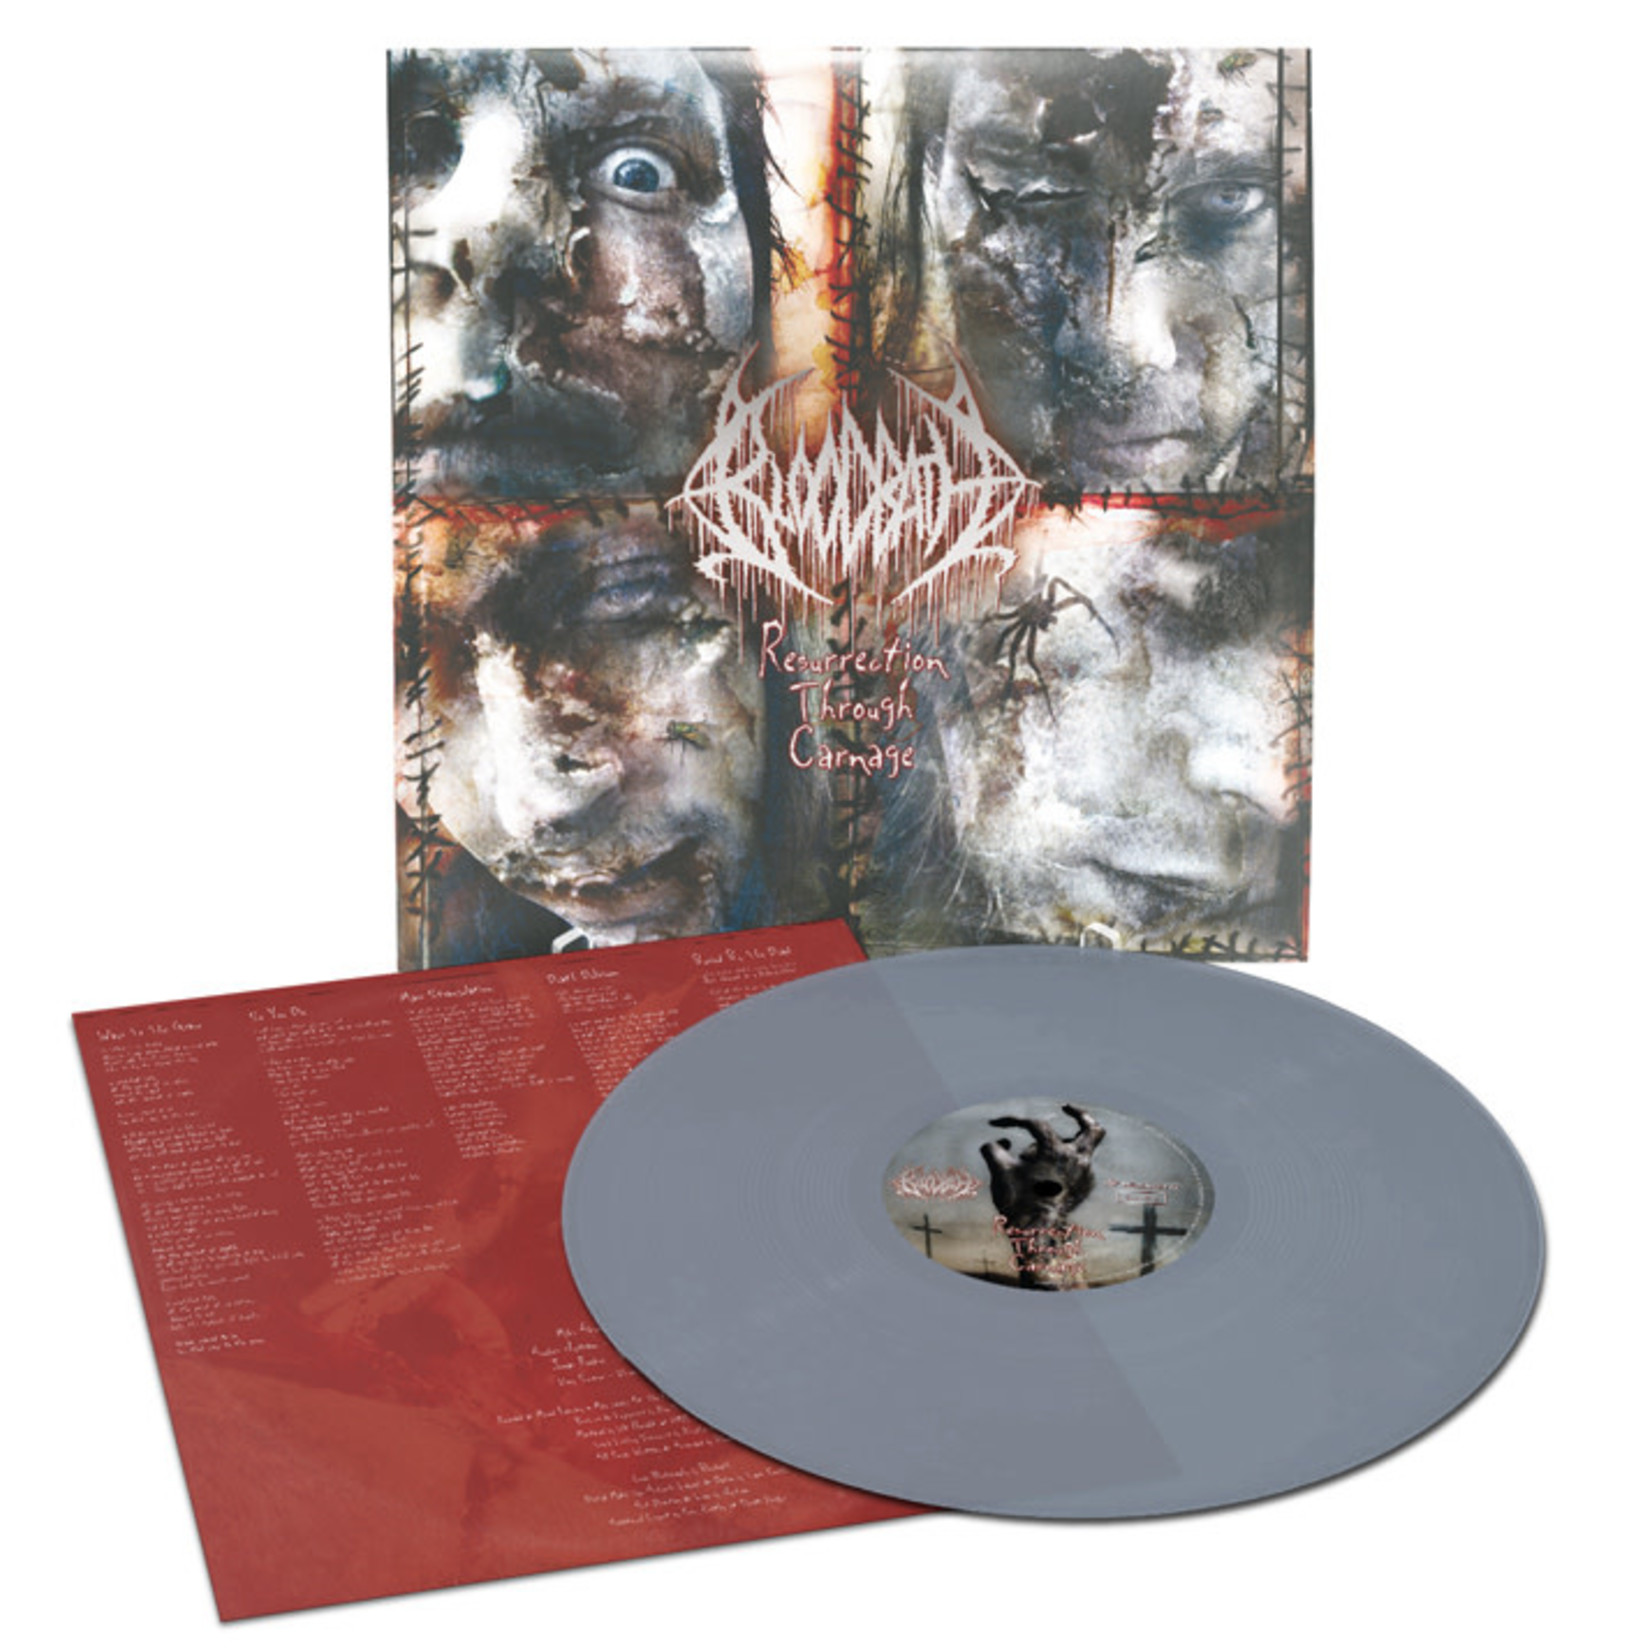 [New] Bloodbath - Resurrection Through Carnage (silver vinyl)